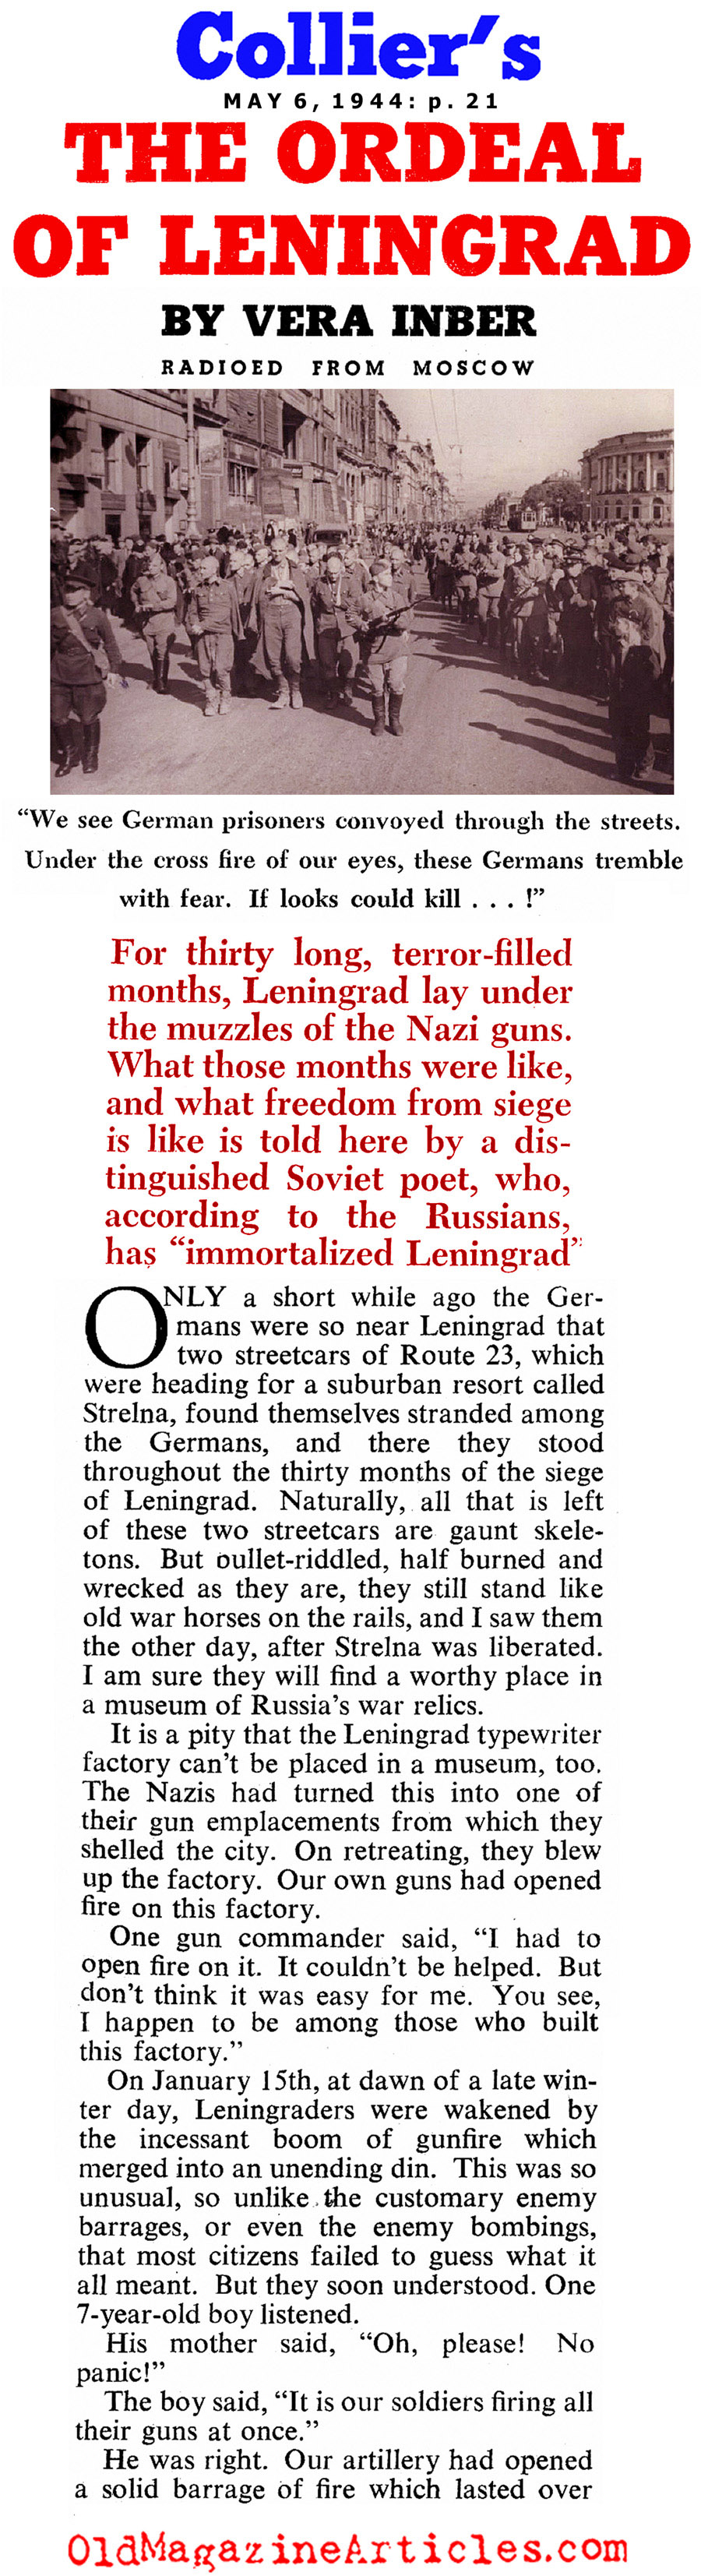 The Siege Of Leningrad (Collier's Magazine, 1944) 